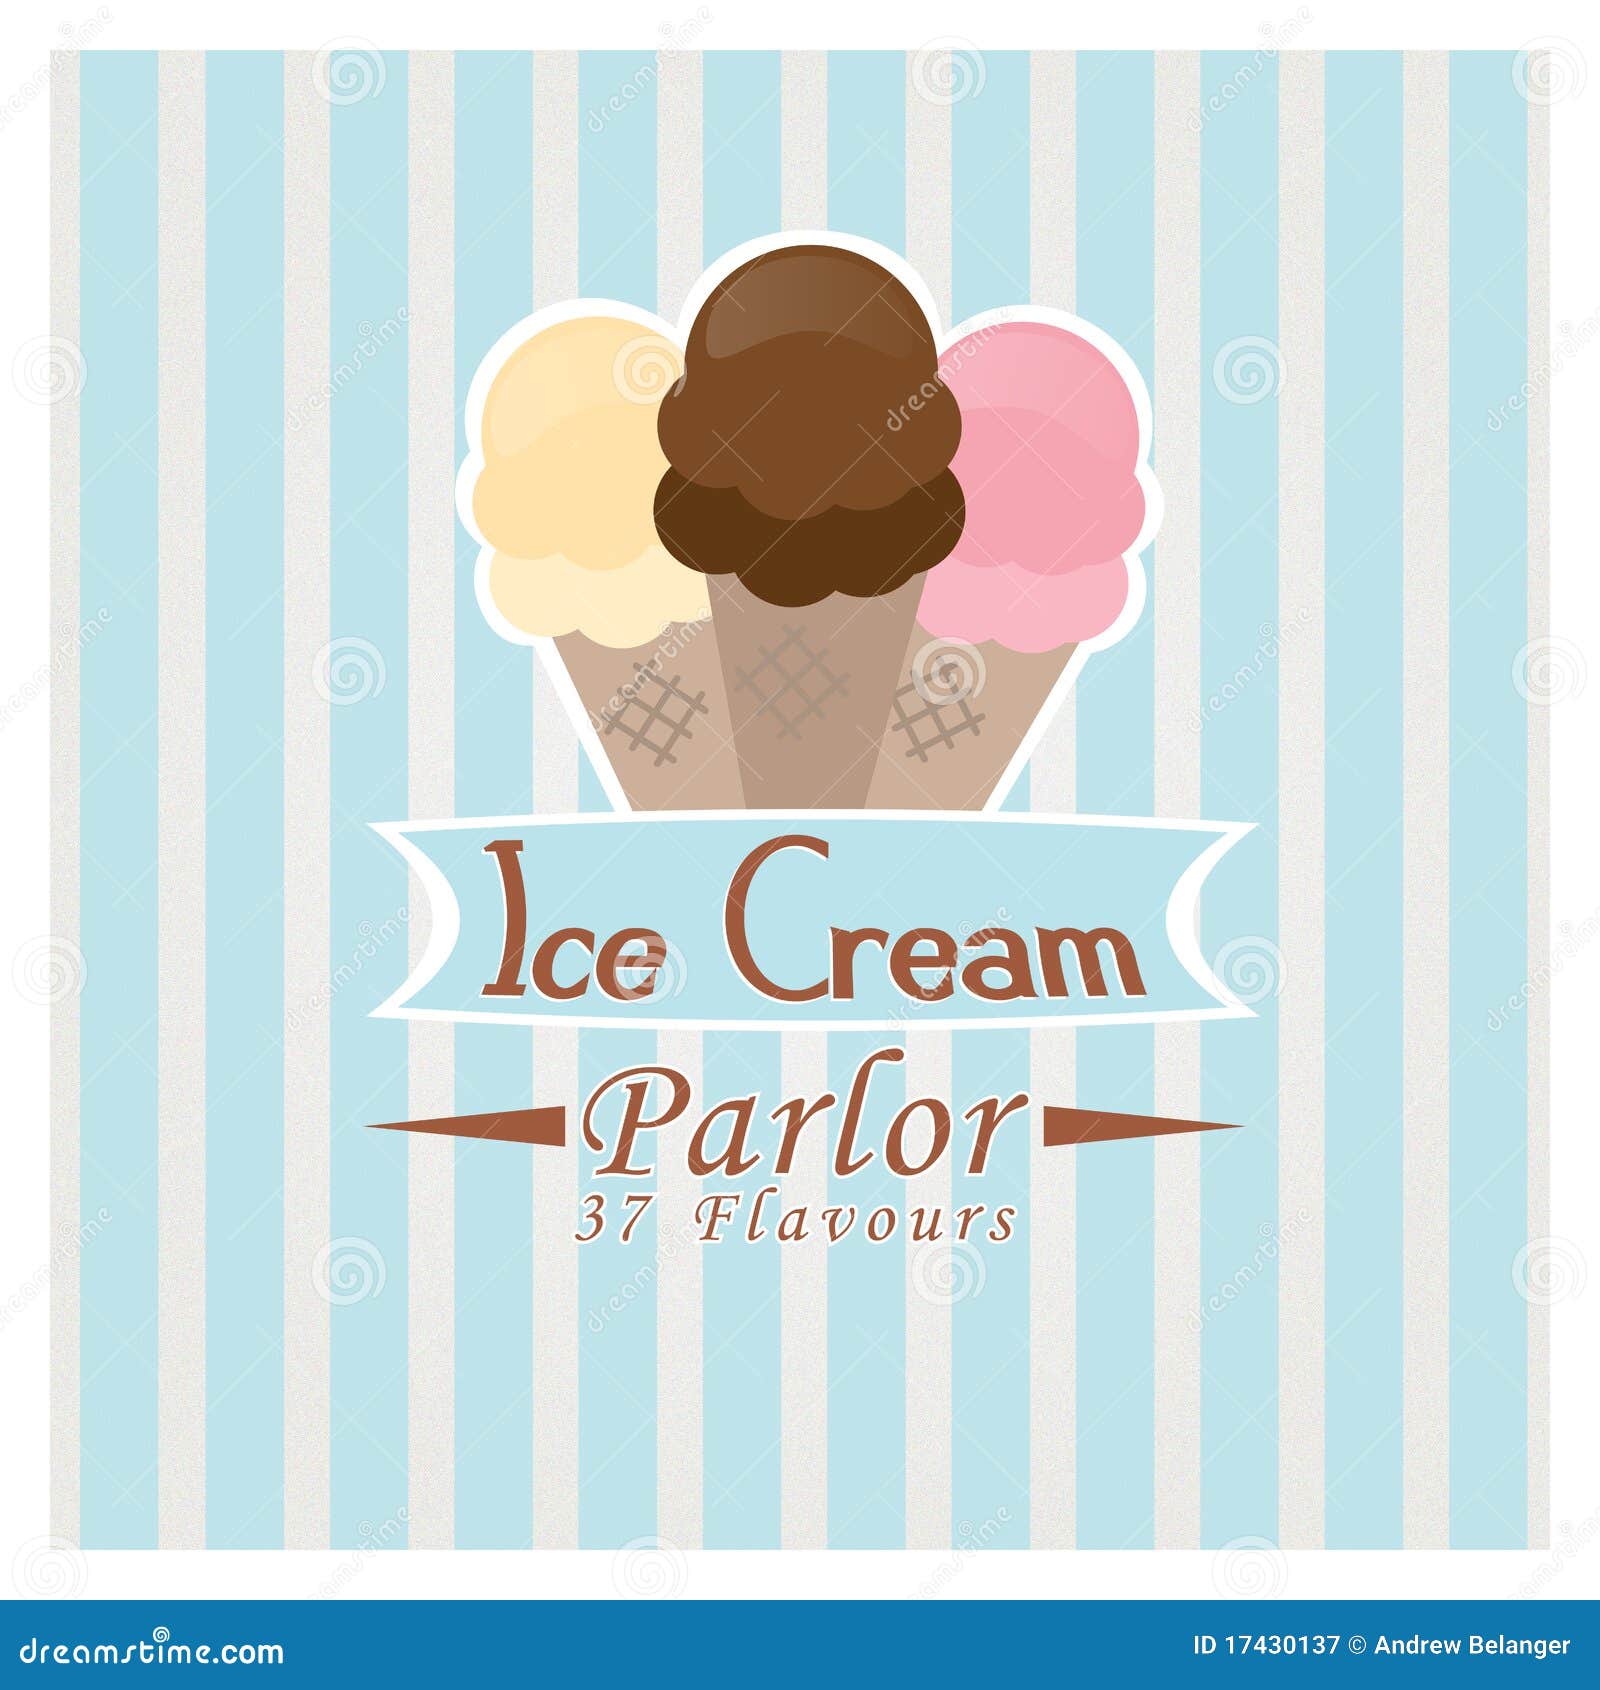 ice cream parlor